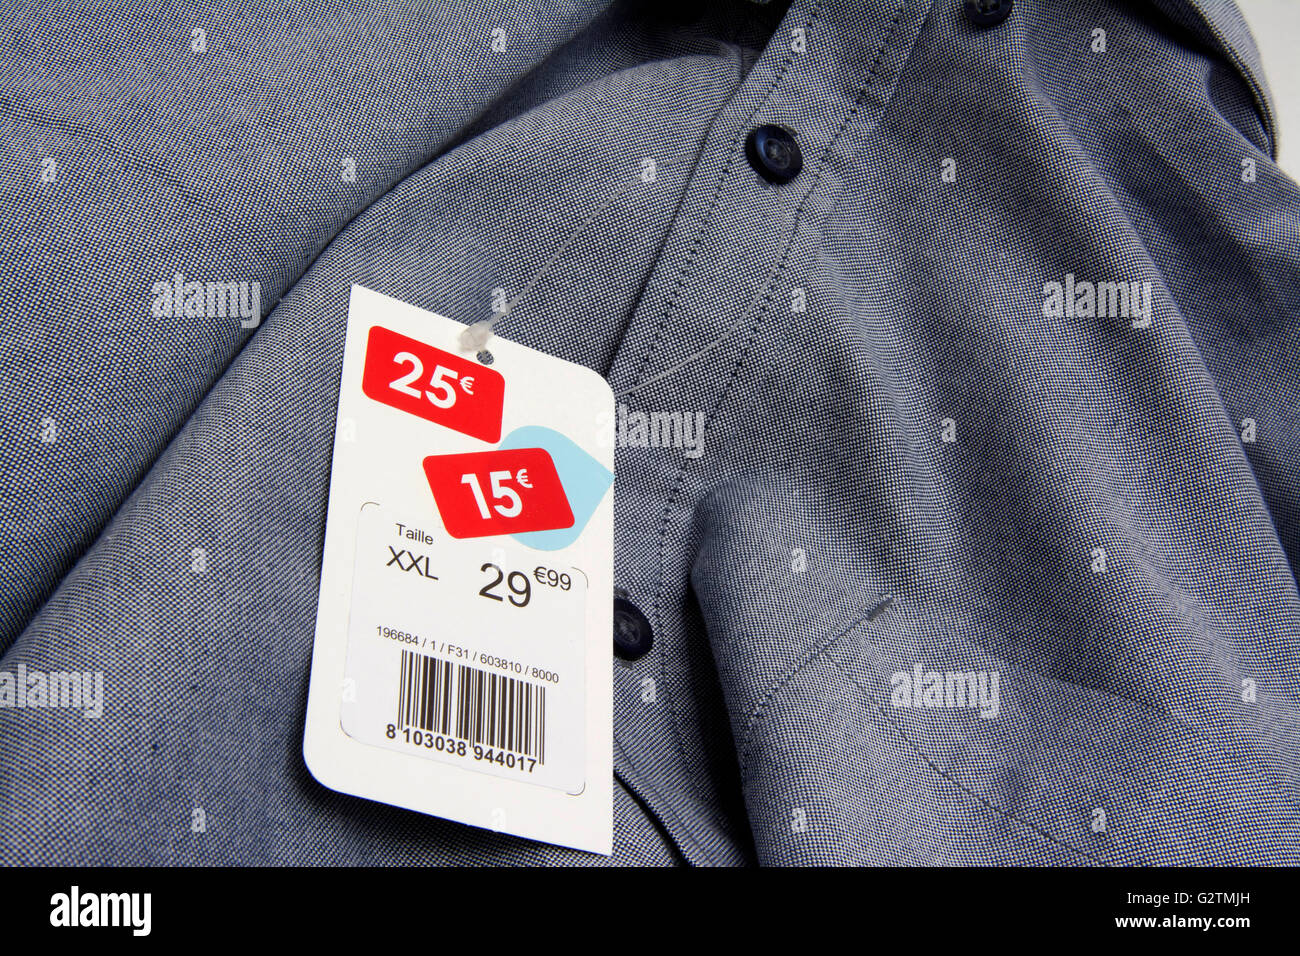 Kleidung im Sale, reduziert Preis in Euro Stockfotografie - Alamy